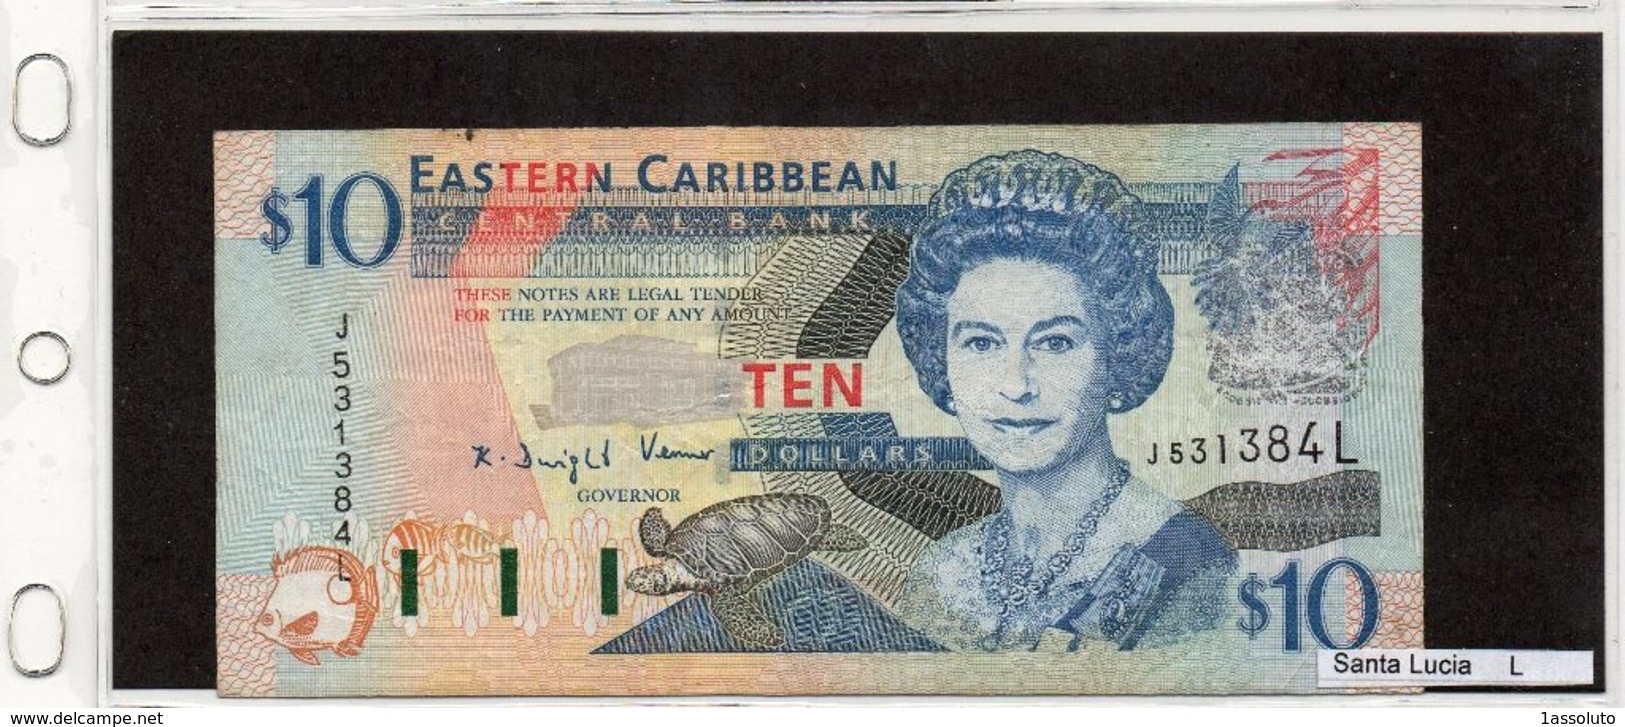 Banconota "Santa Lucia" 10 Dollars - East Carribeans